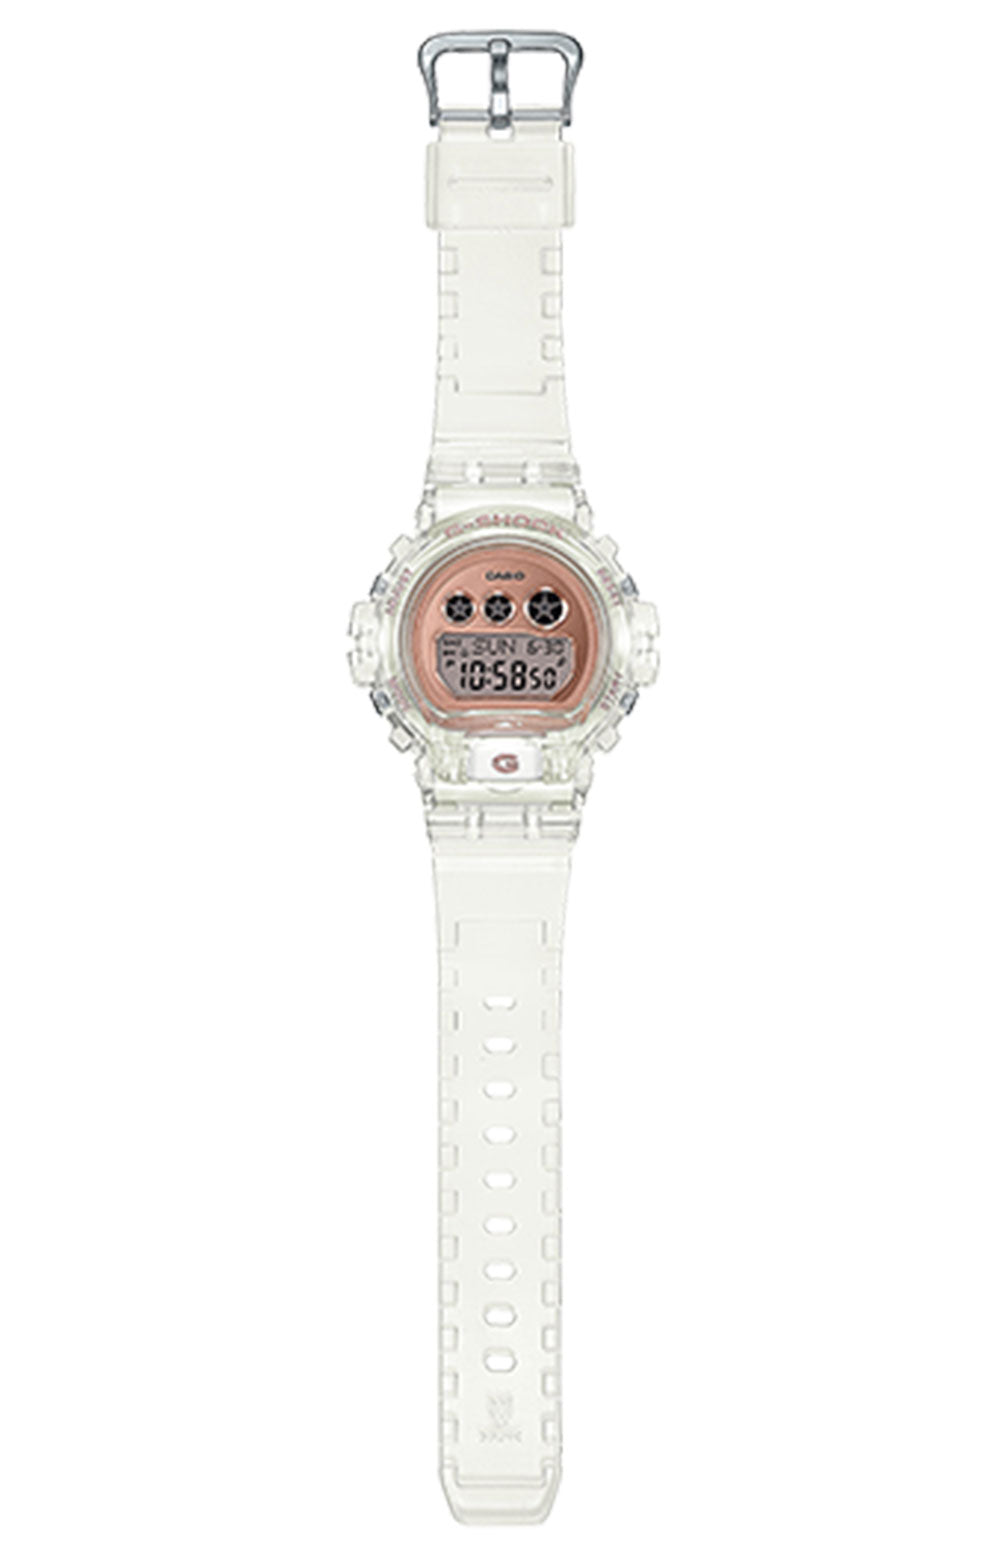 GMDS6900SR-7 Watch